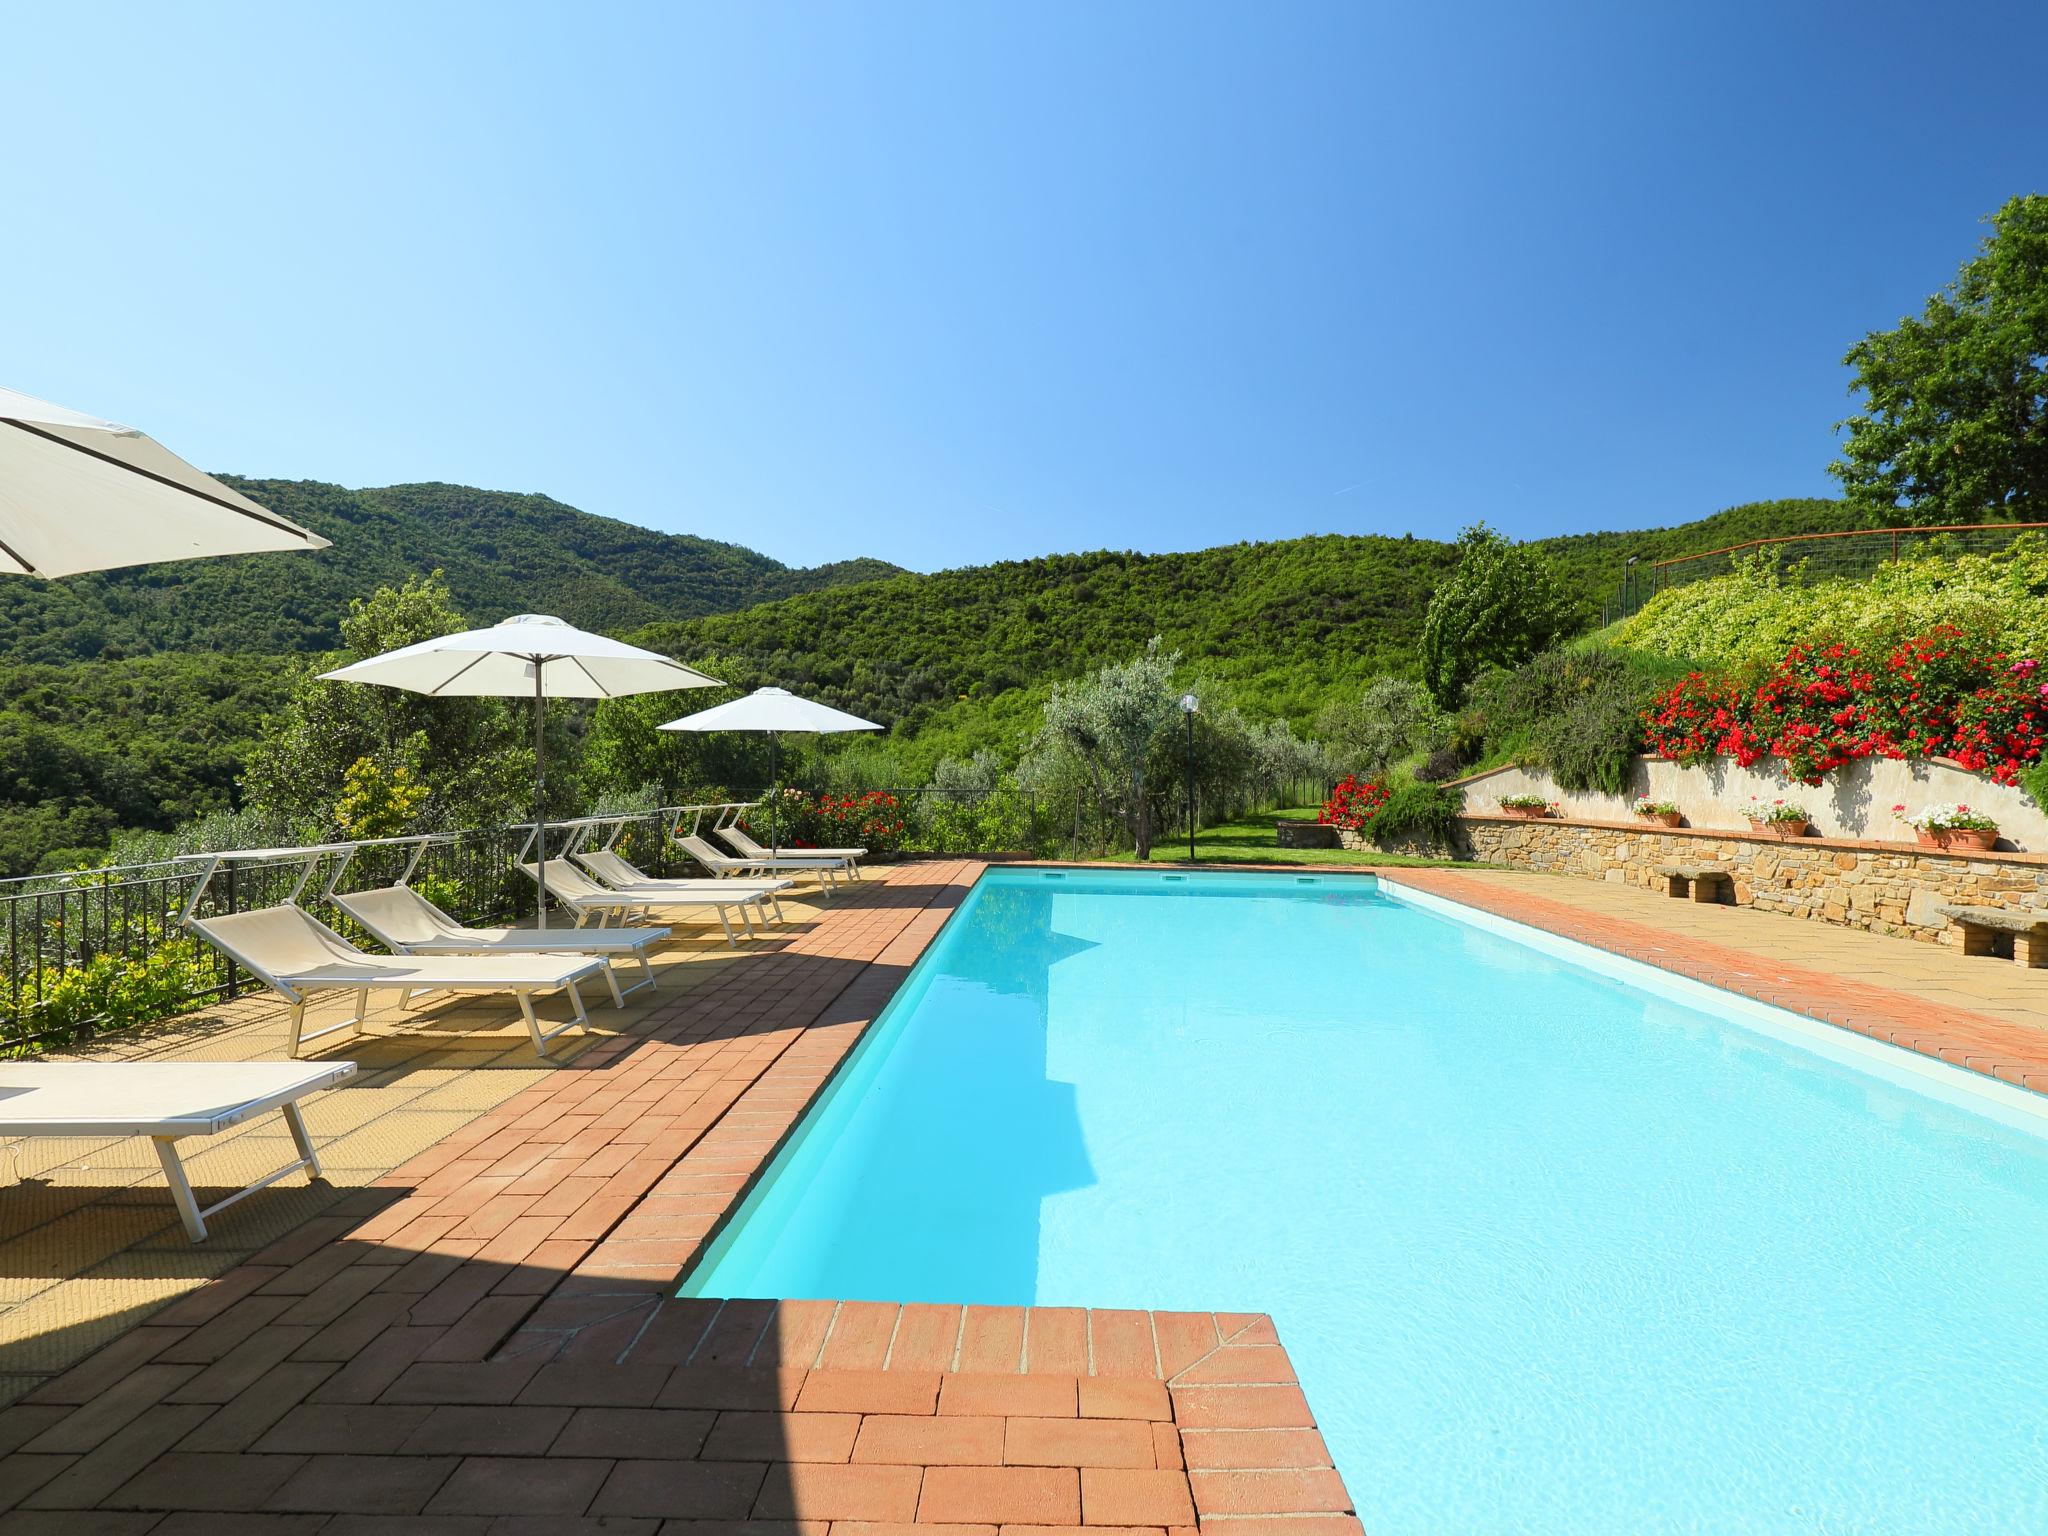 Photo 2 - Maison de 6 chambres à Castiglion Fiorentino avec piscine privée